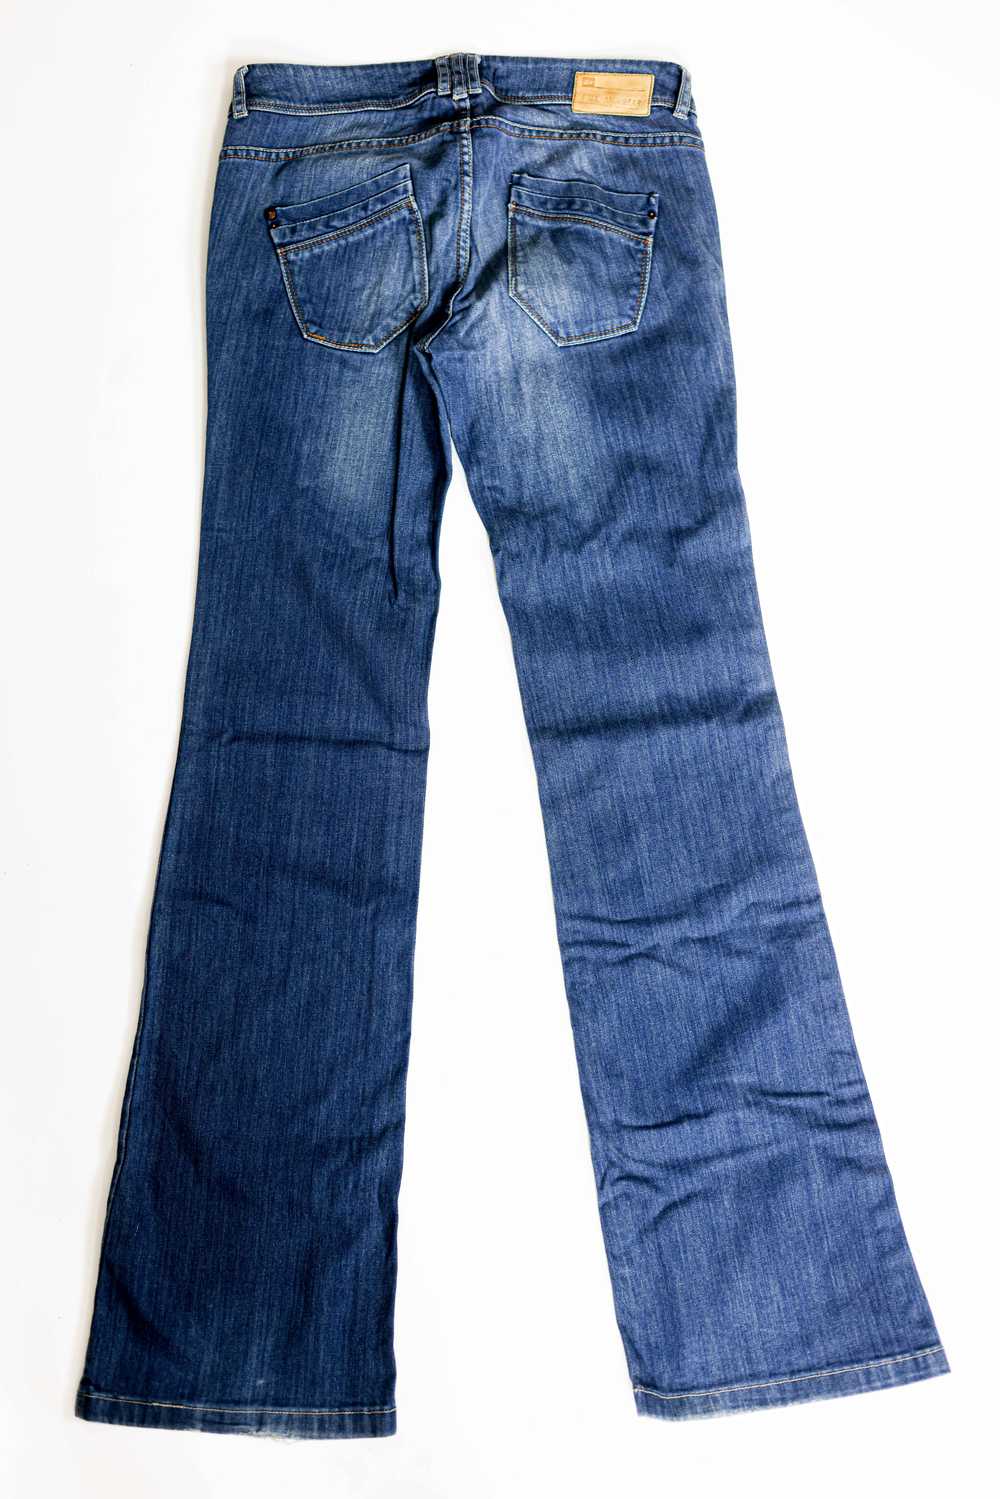 Pull & Bear Women's Denim Basic  Jean Size Euro 40 - image 2